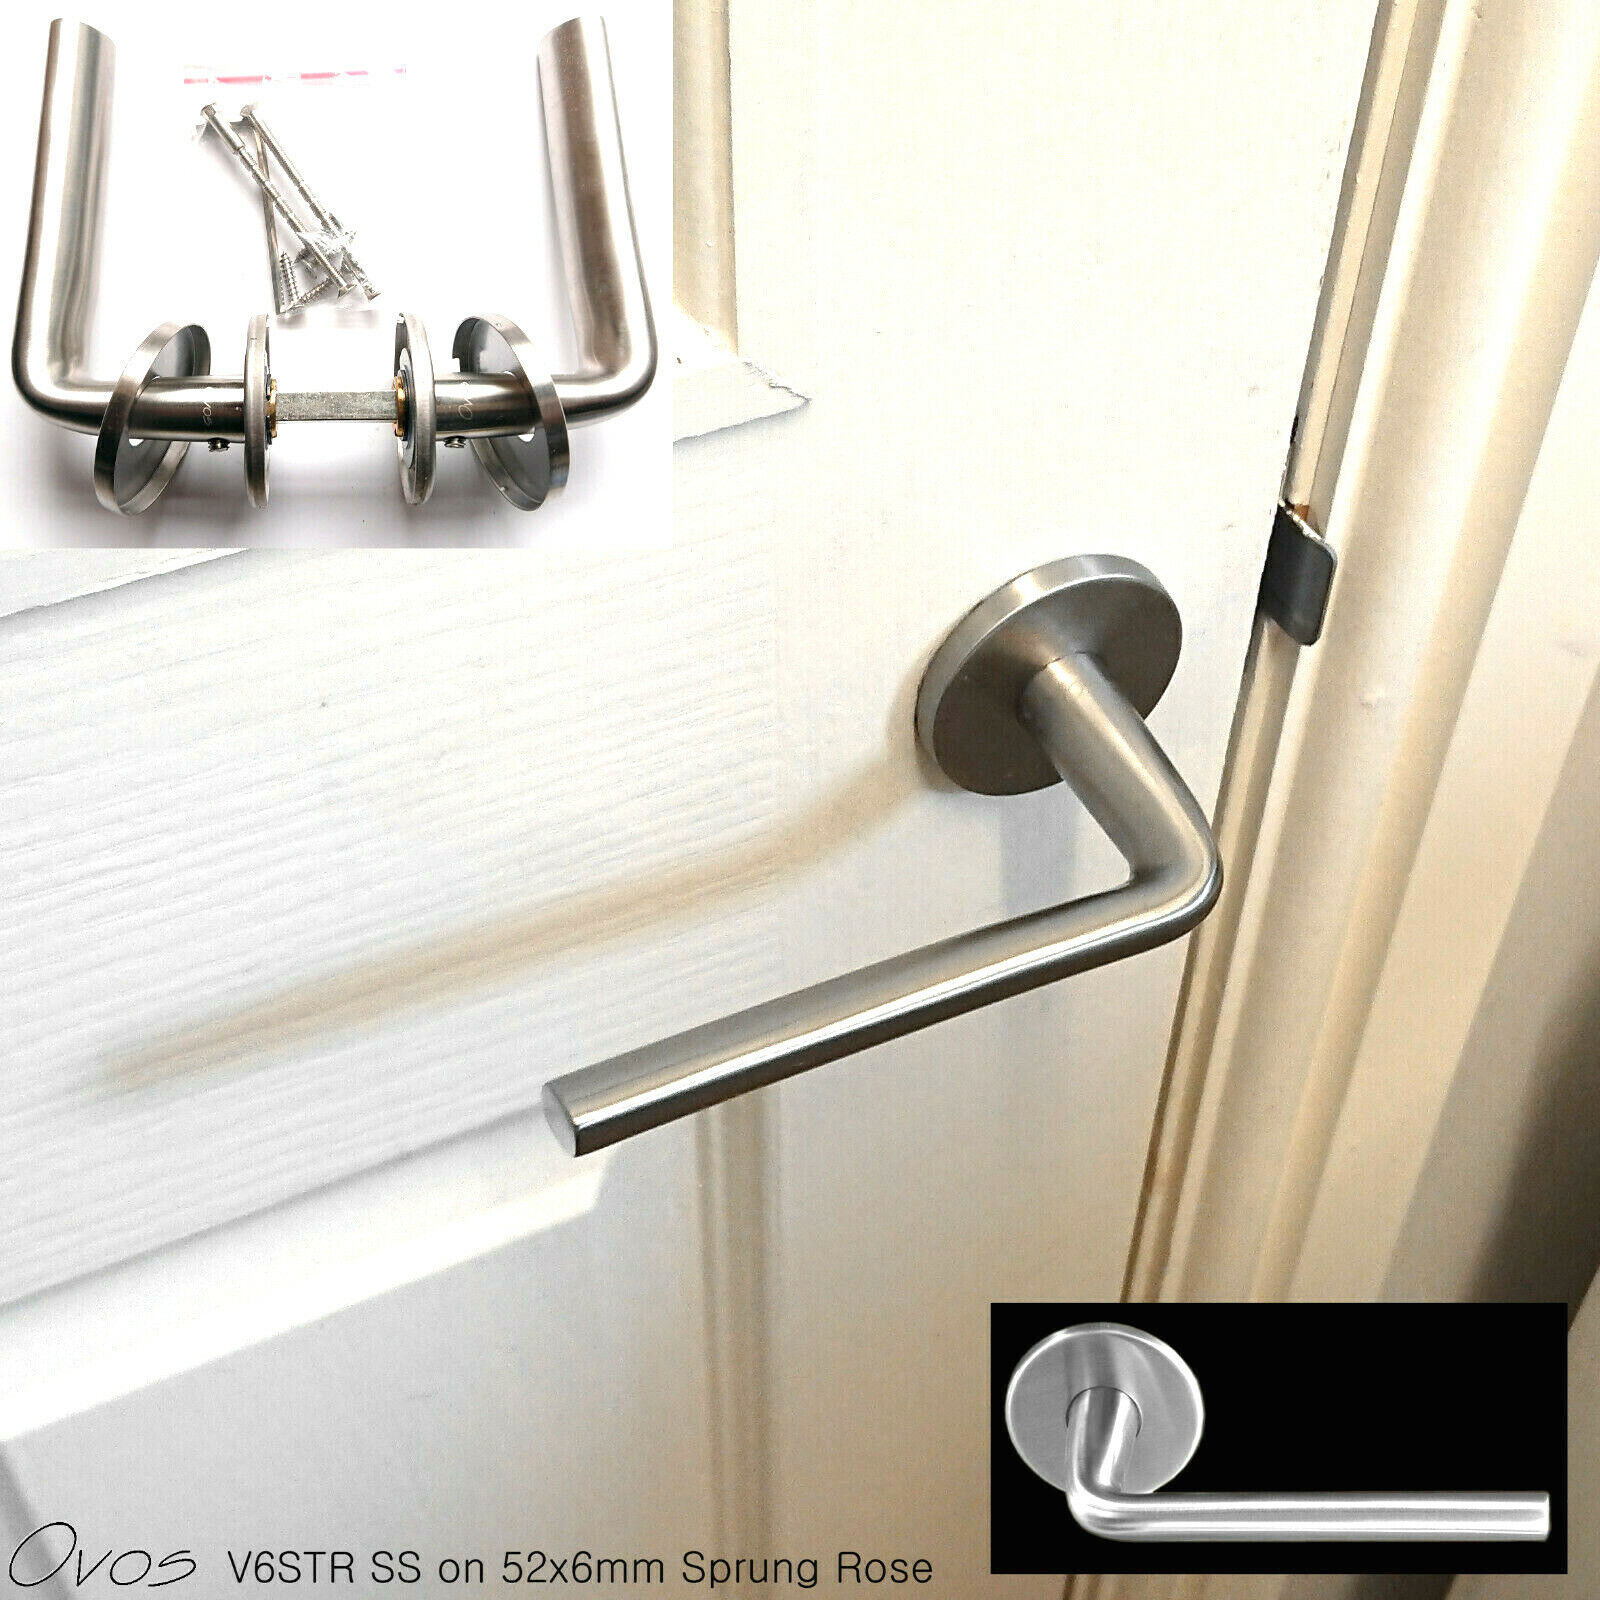  100 sets of Lever door handles UK 🇬🇧 design Stainless steel SATIN FINISH